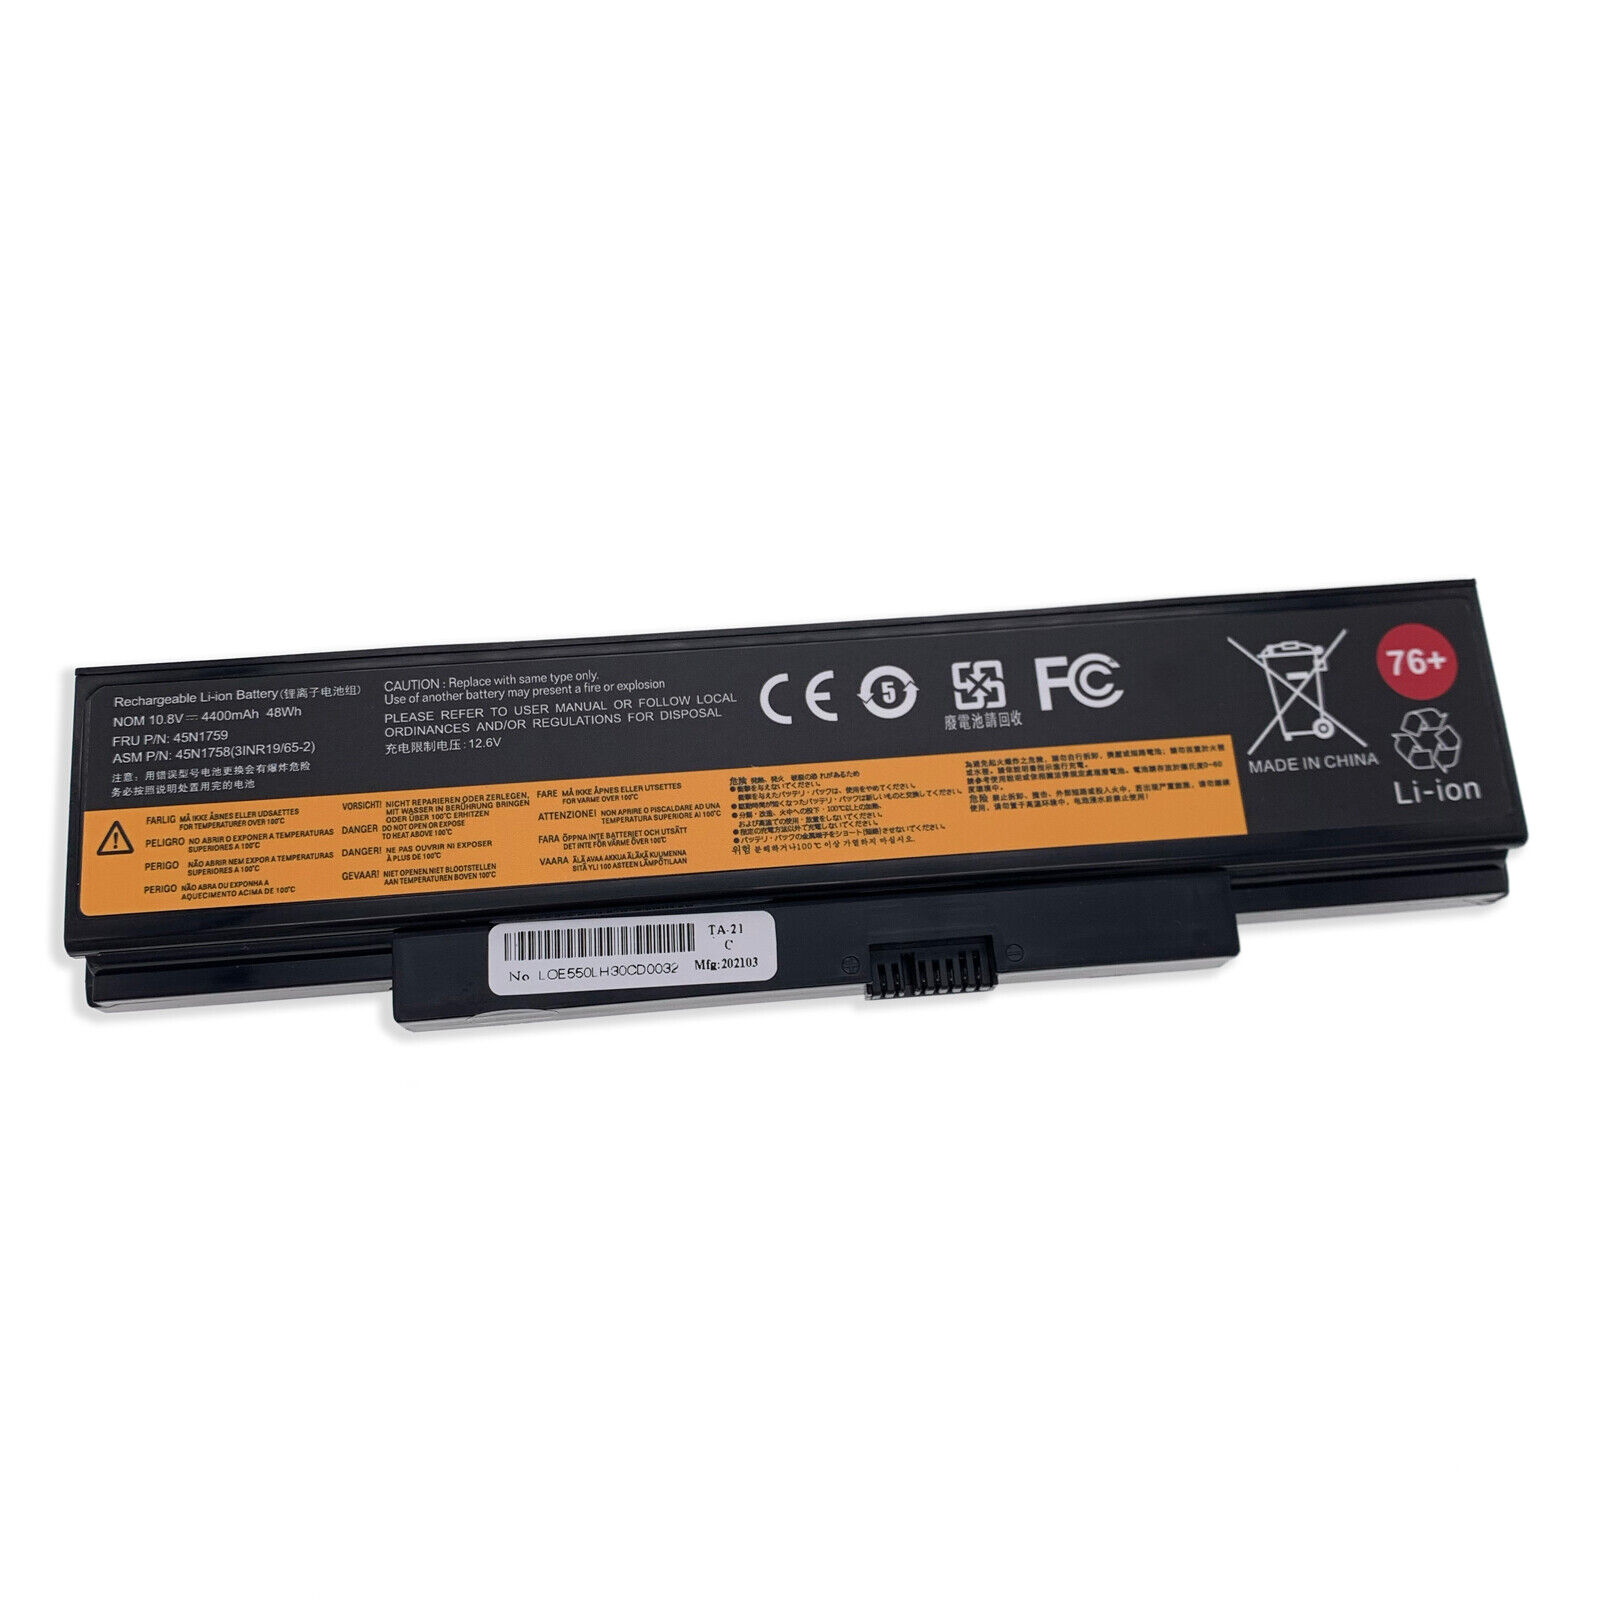 New 76+ 45N1760 45N1761 45R6758 Battery for Lenovo ThinkPad E550 E550C E555 E560